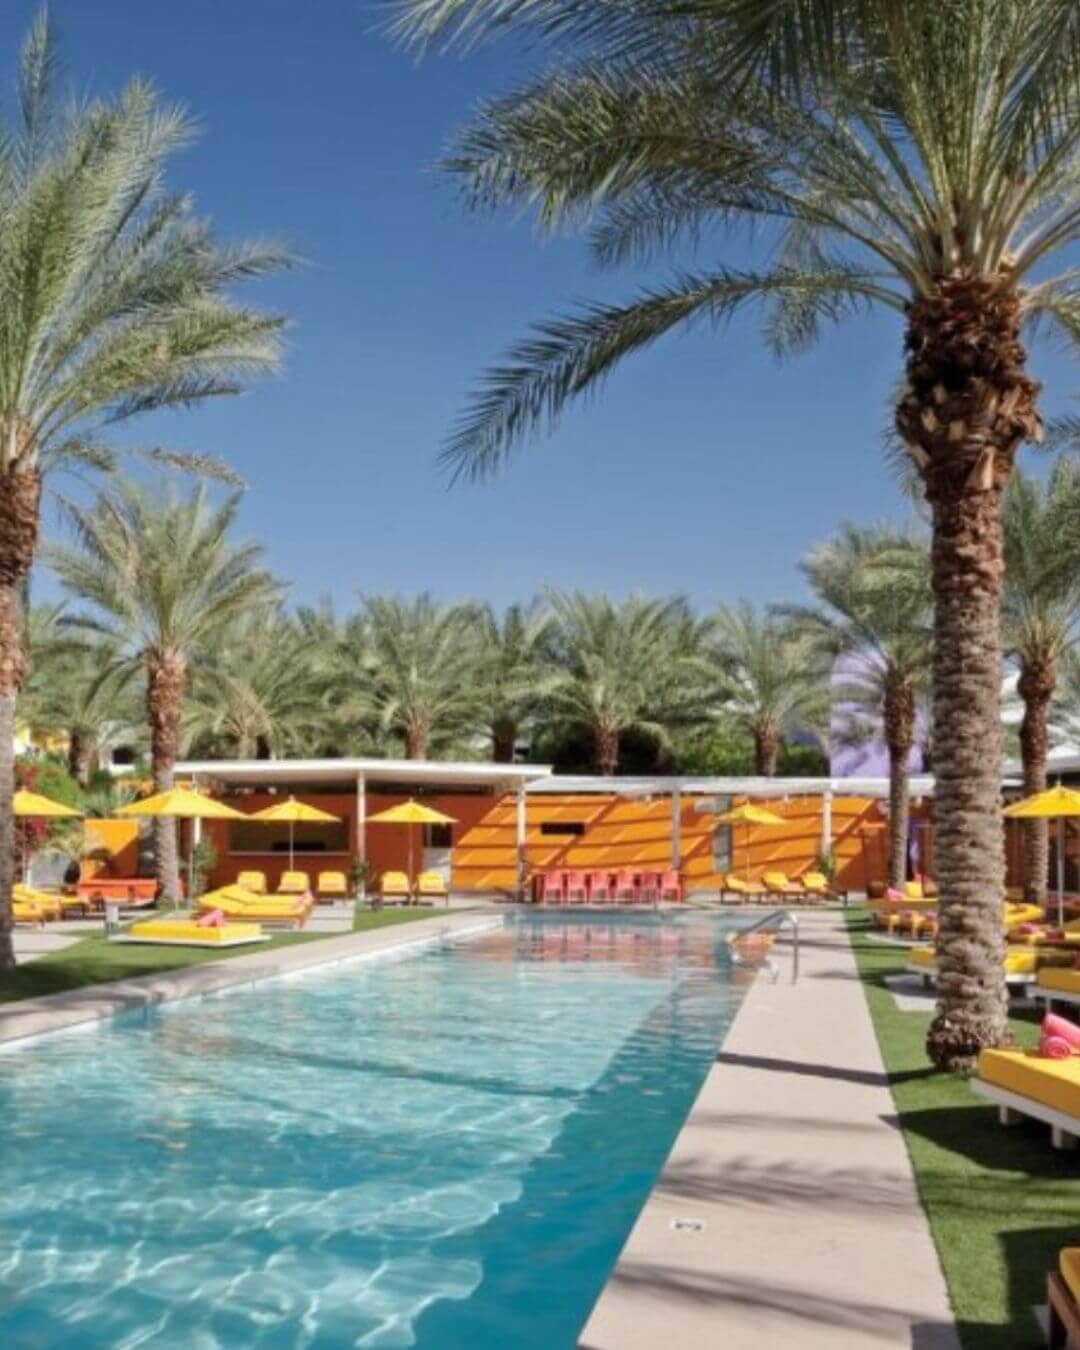 pool area of the saguaro hotel in scottsdale arizona